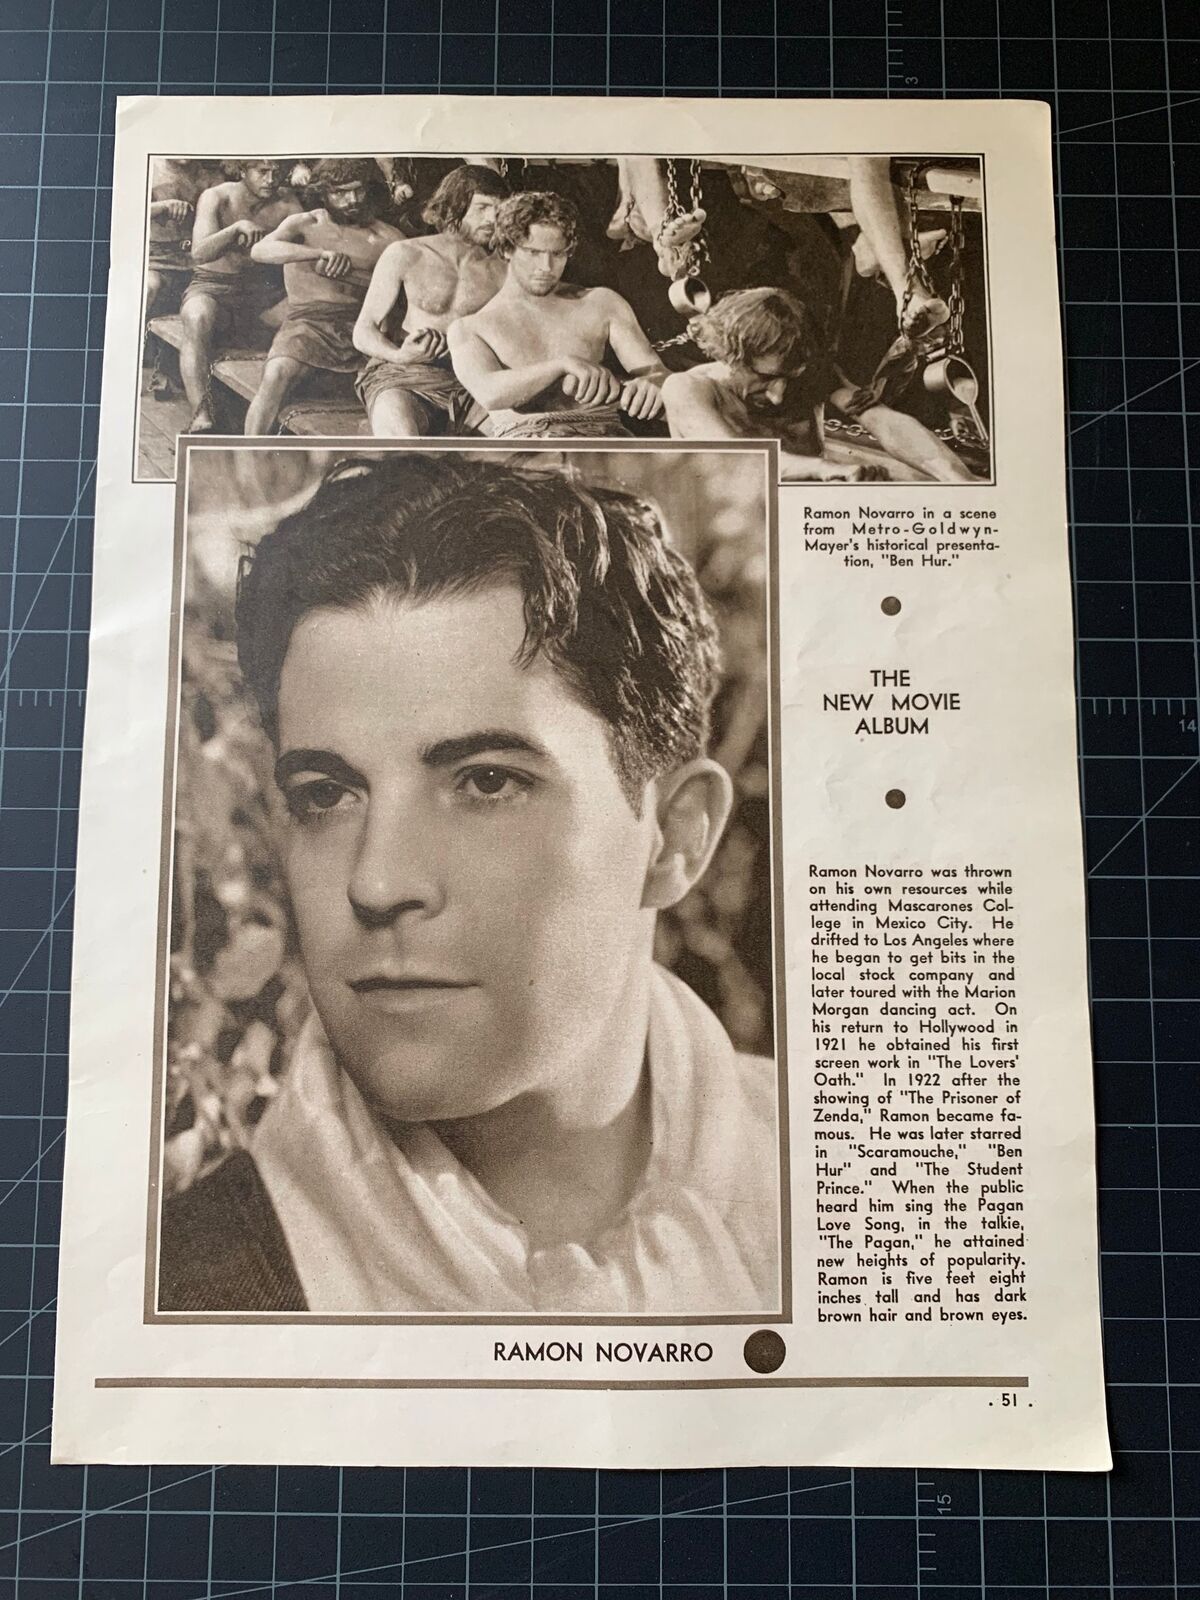 Rare/Scarce Vintage 1930 Hollywood Star Portrait - Ramon Navarro - Publicity